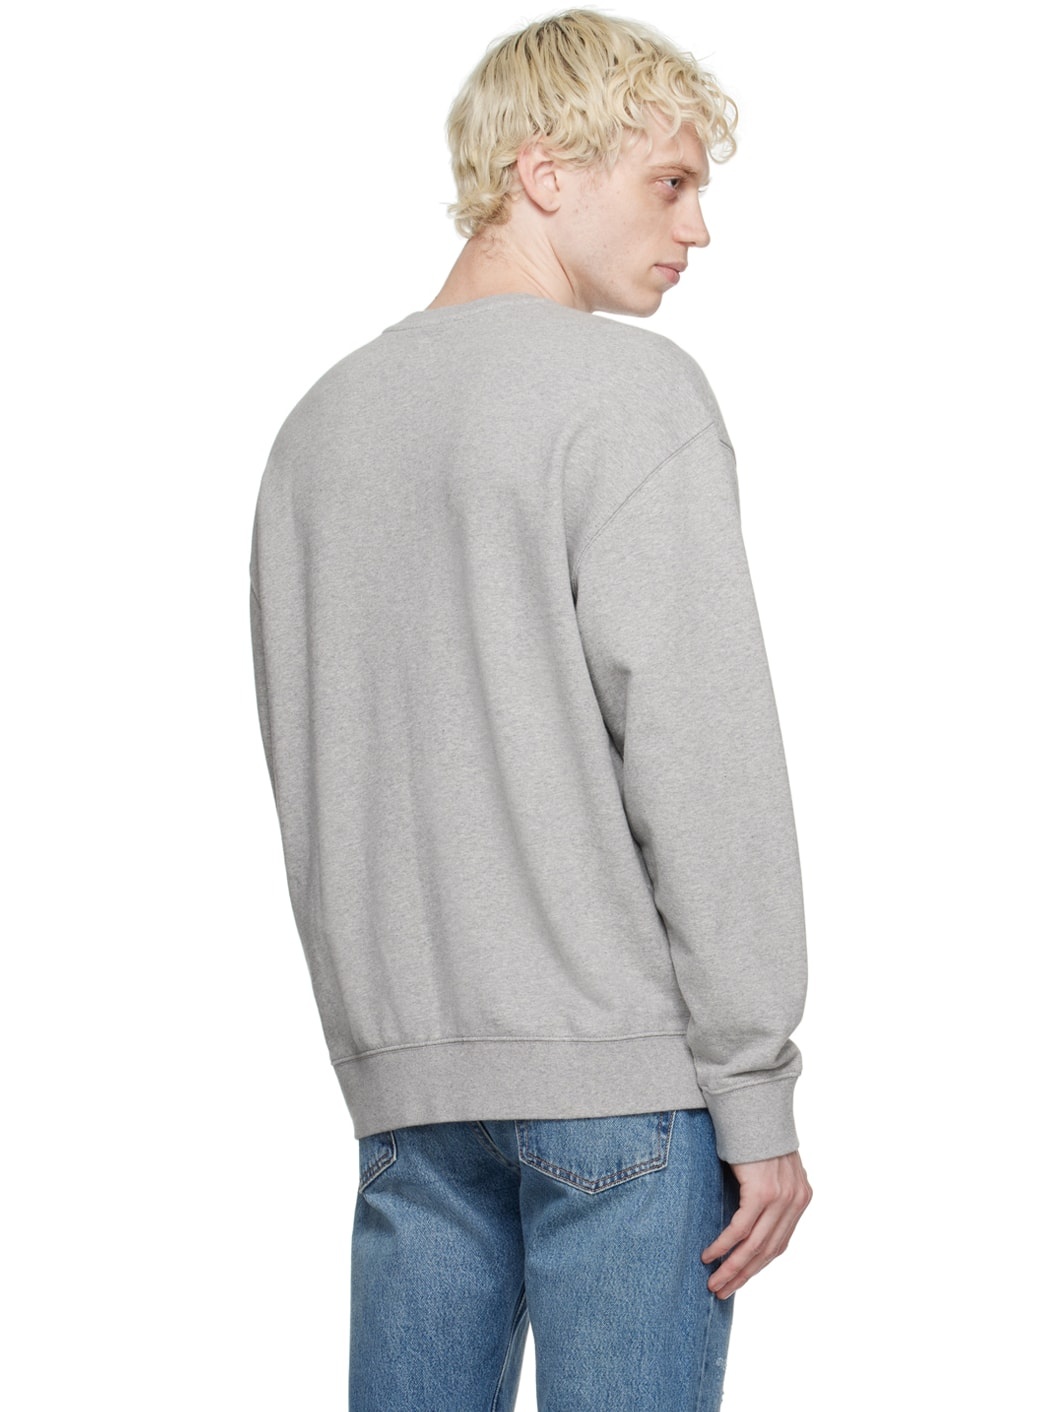 Gray Printed Sweatshirt - 3